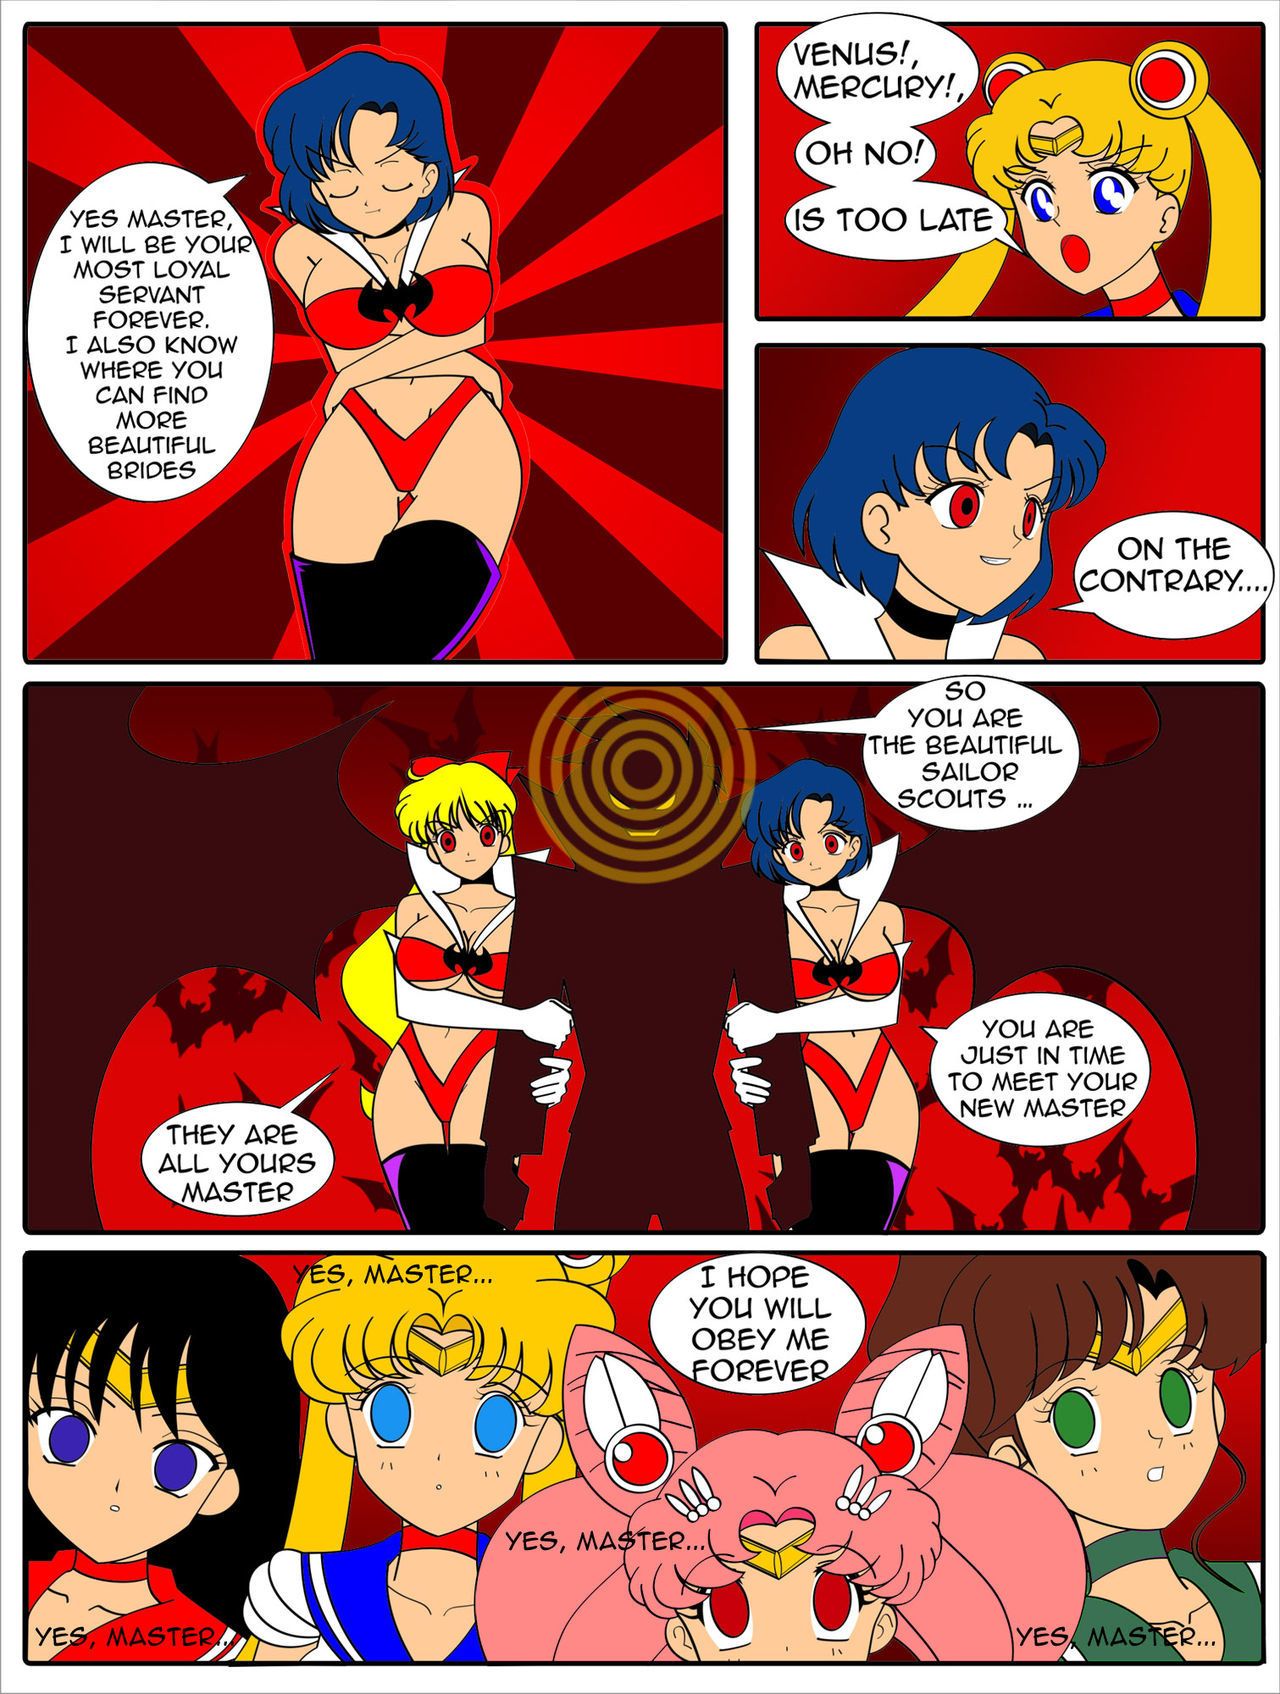 Jimryu Sailor Vamp (Sailor Moon)